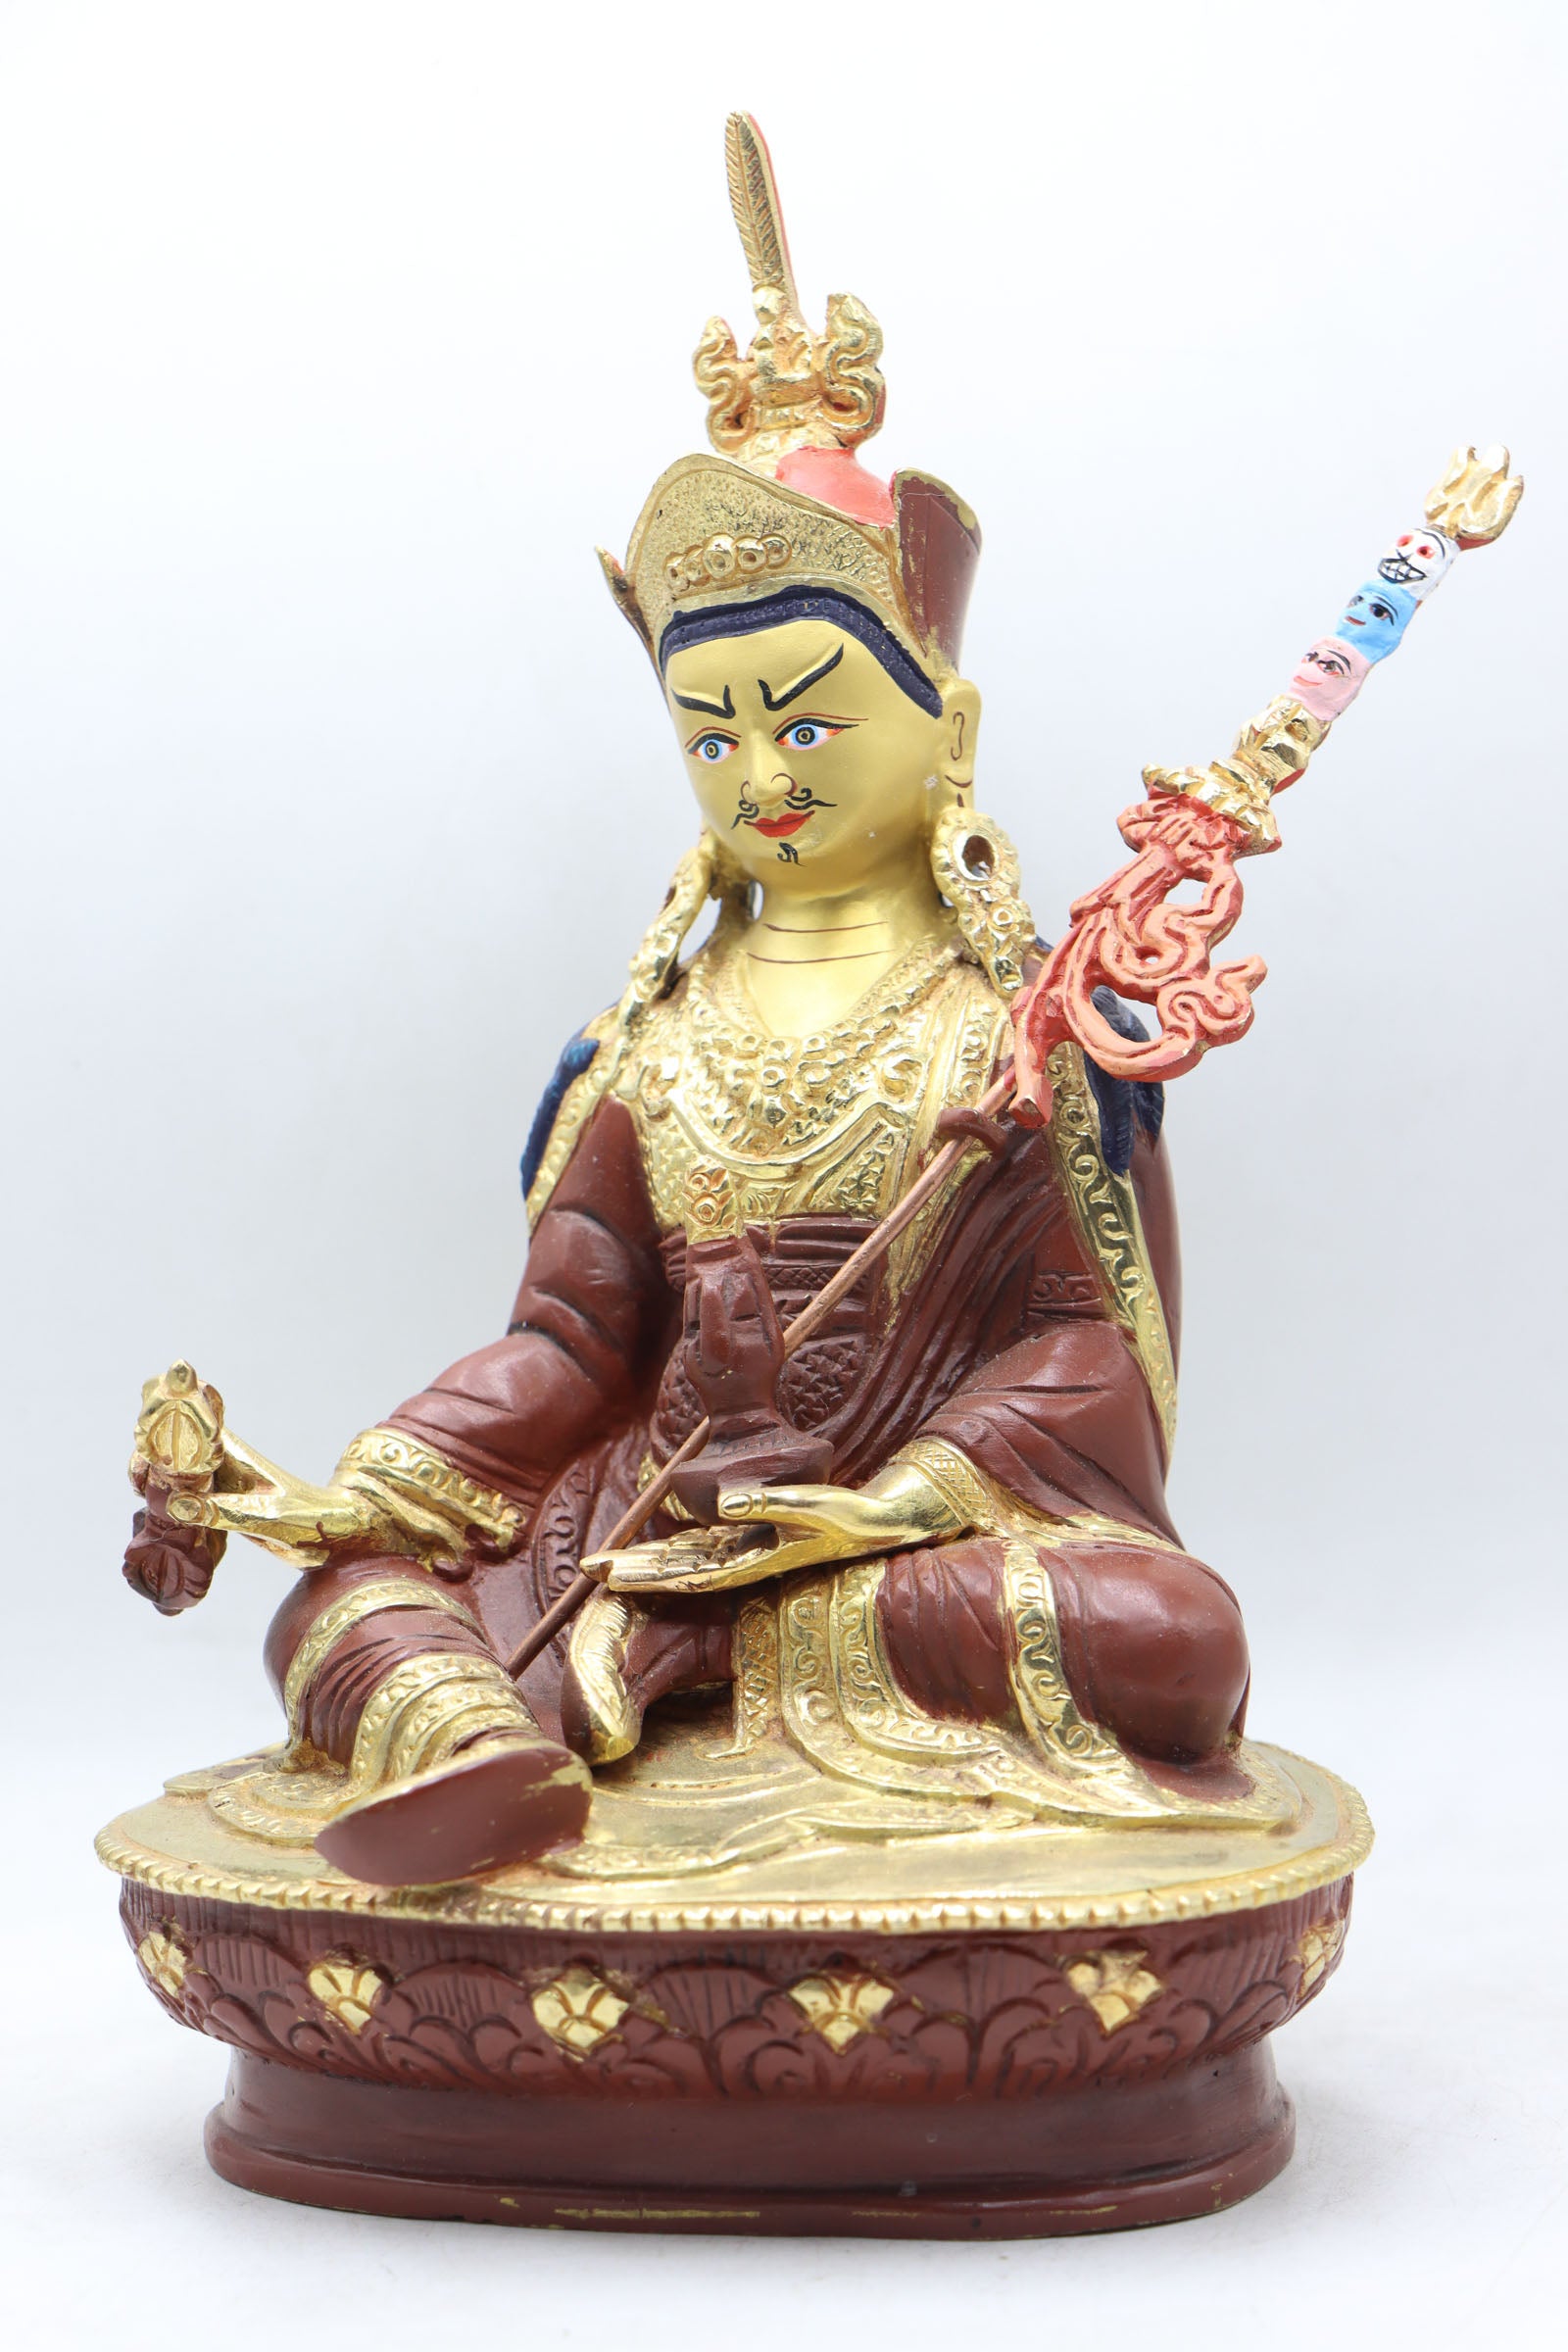 Guru Rinpoche Statue for wisdom, compassion, and spiritual power.